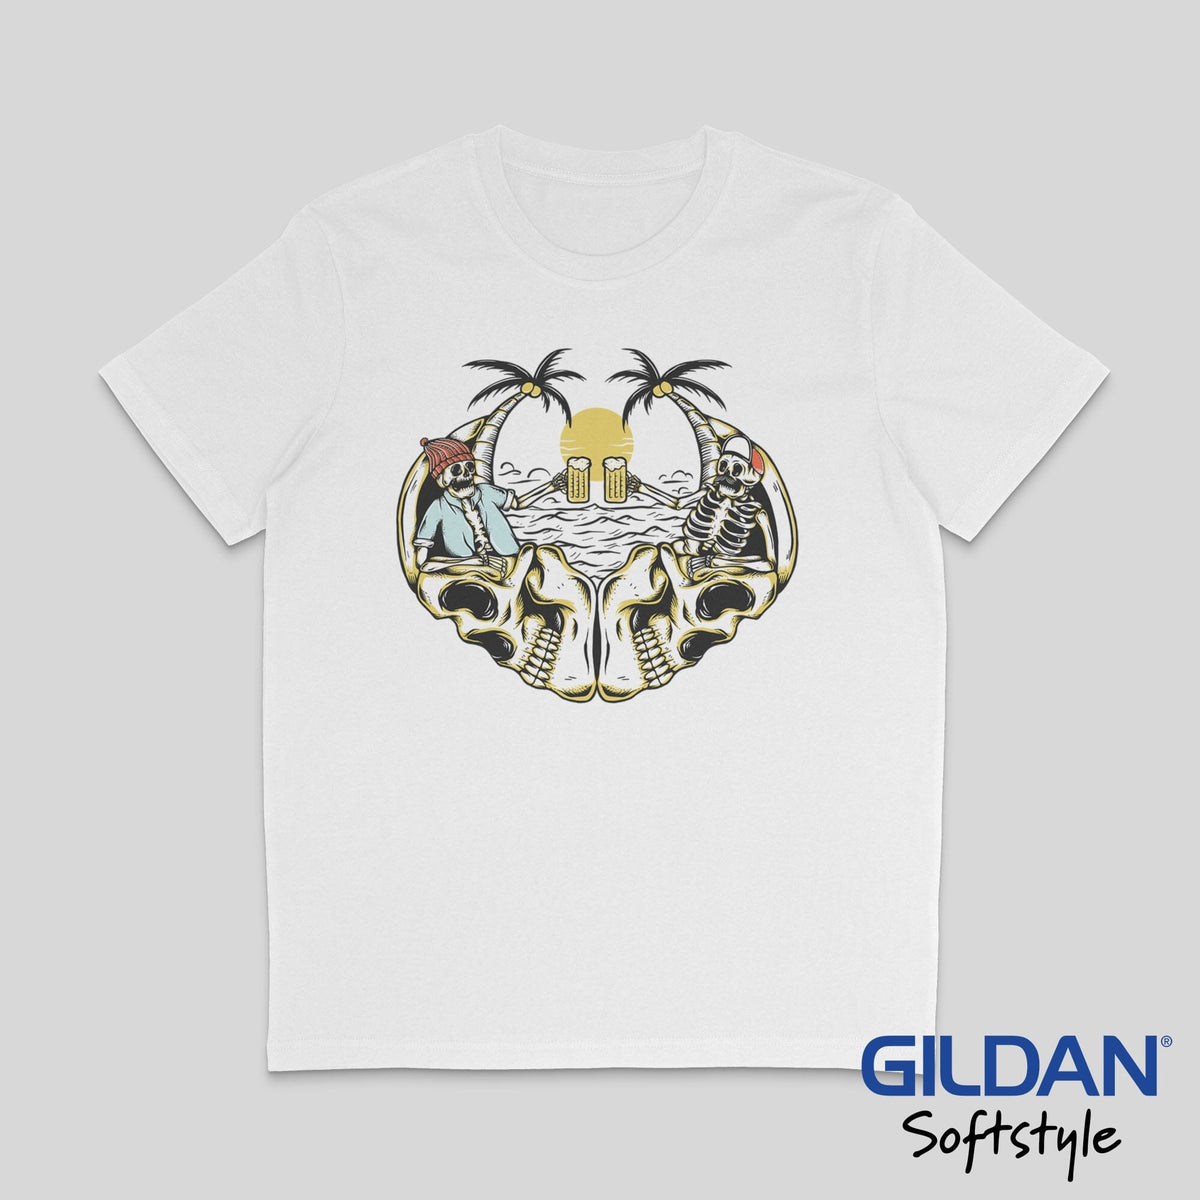 Gildan Softstyle T-Shirts - Your Design - Custom Printed